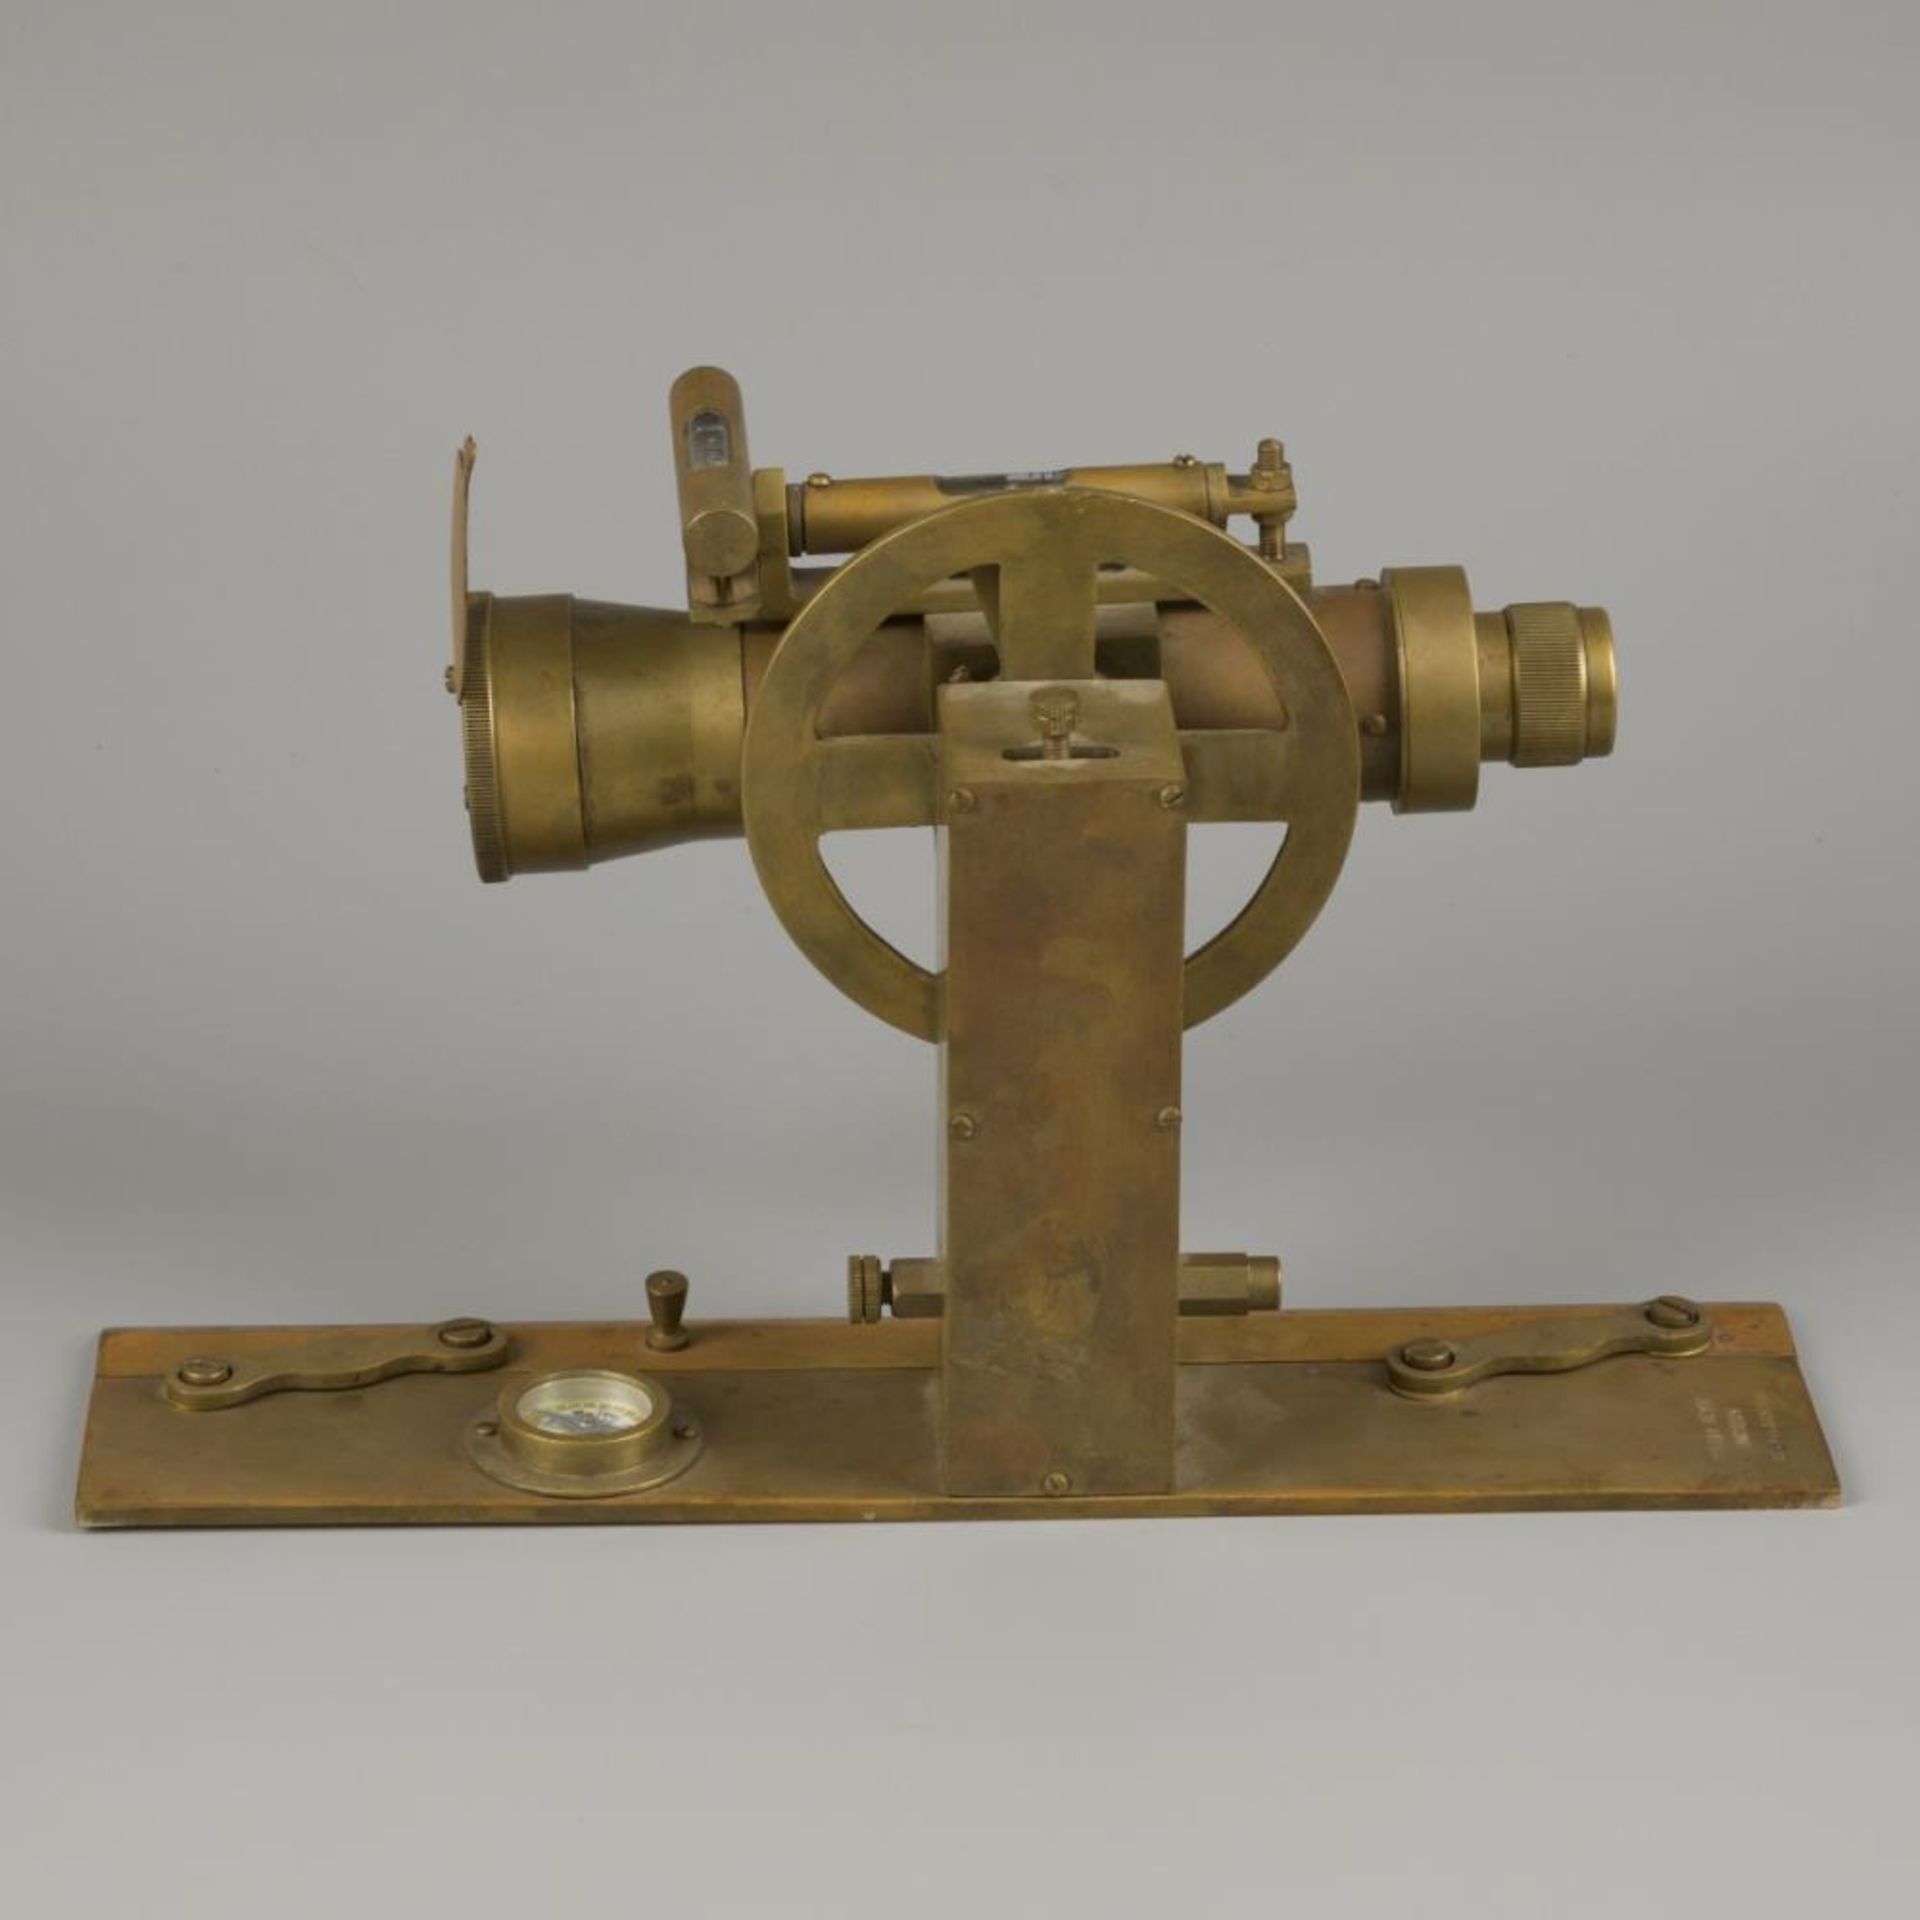 A surveyors' "Gustav Heyde" brass level spirit instrument (transit/ theodolite), Germany, late 19th - Image 2 of 4